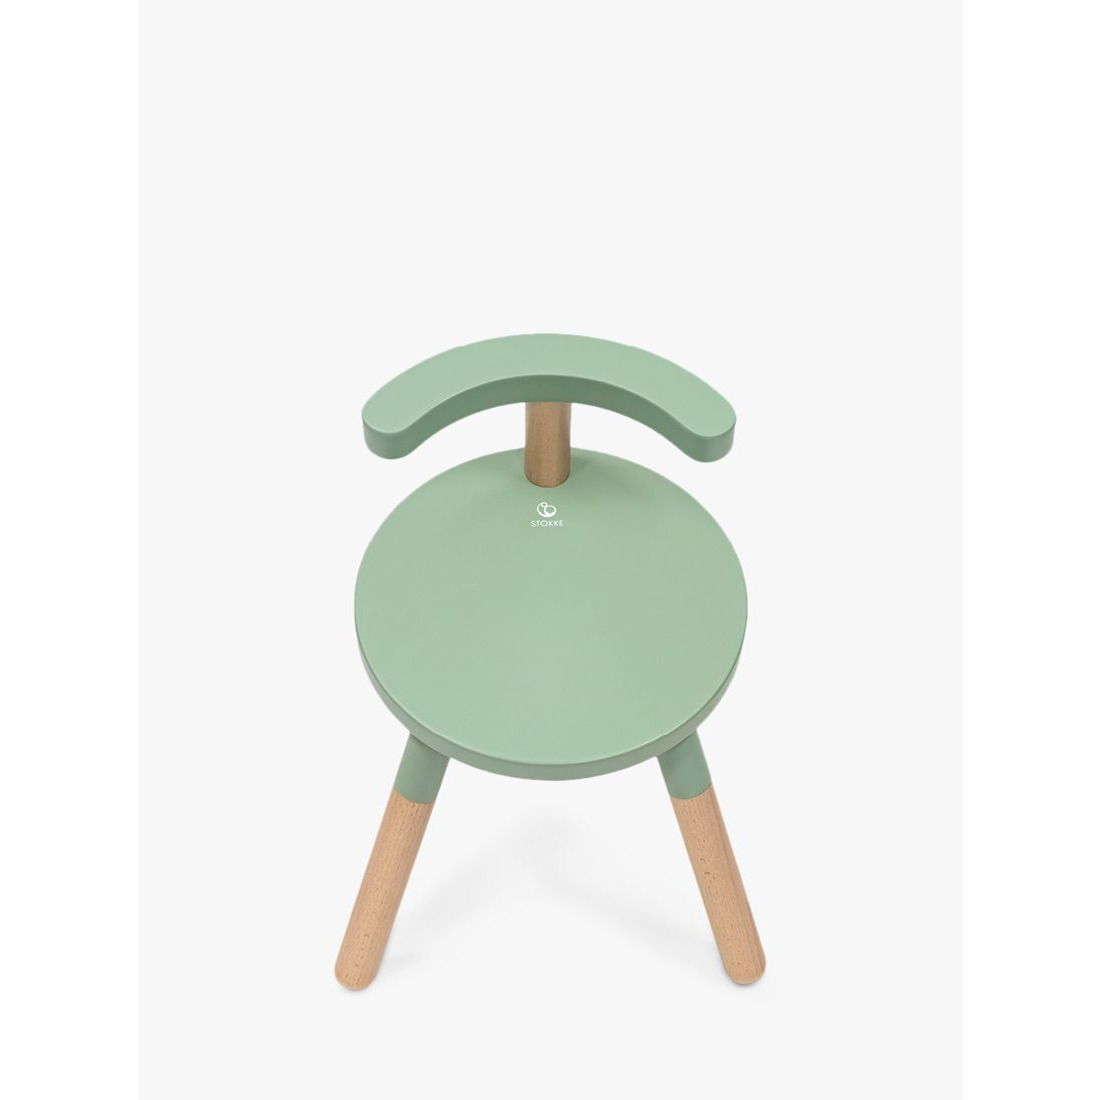 Stokke MuTable V2 Wooden Kids' Chair - image 1